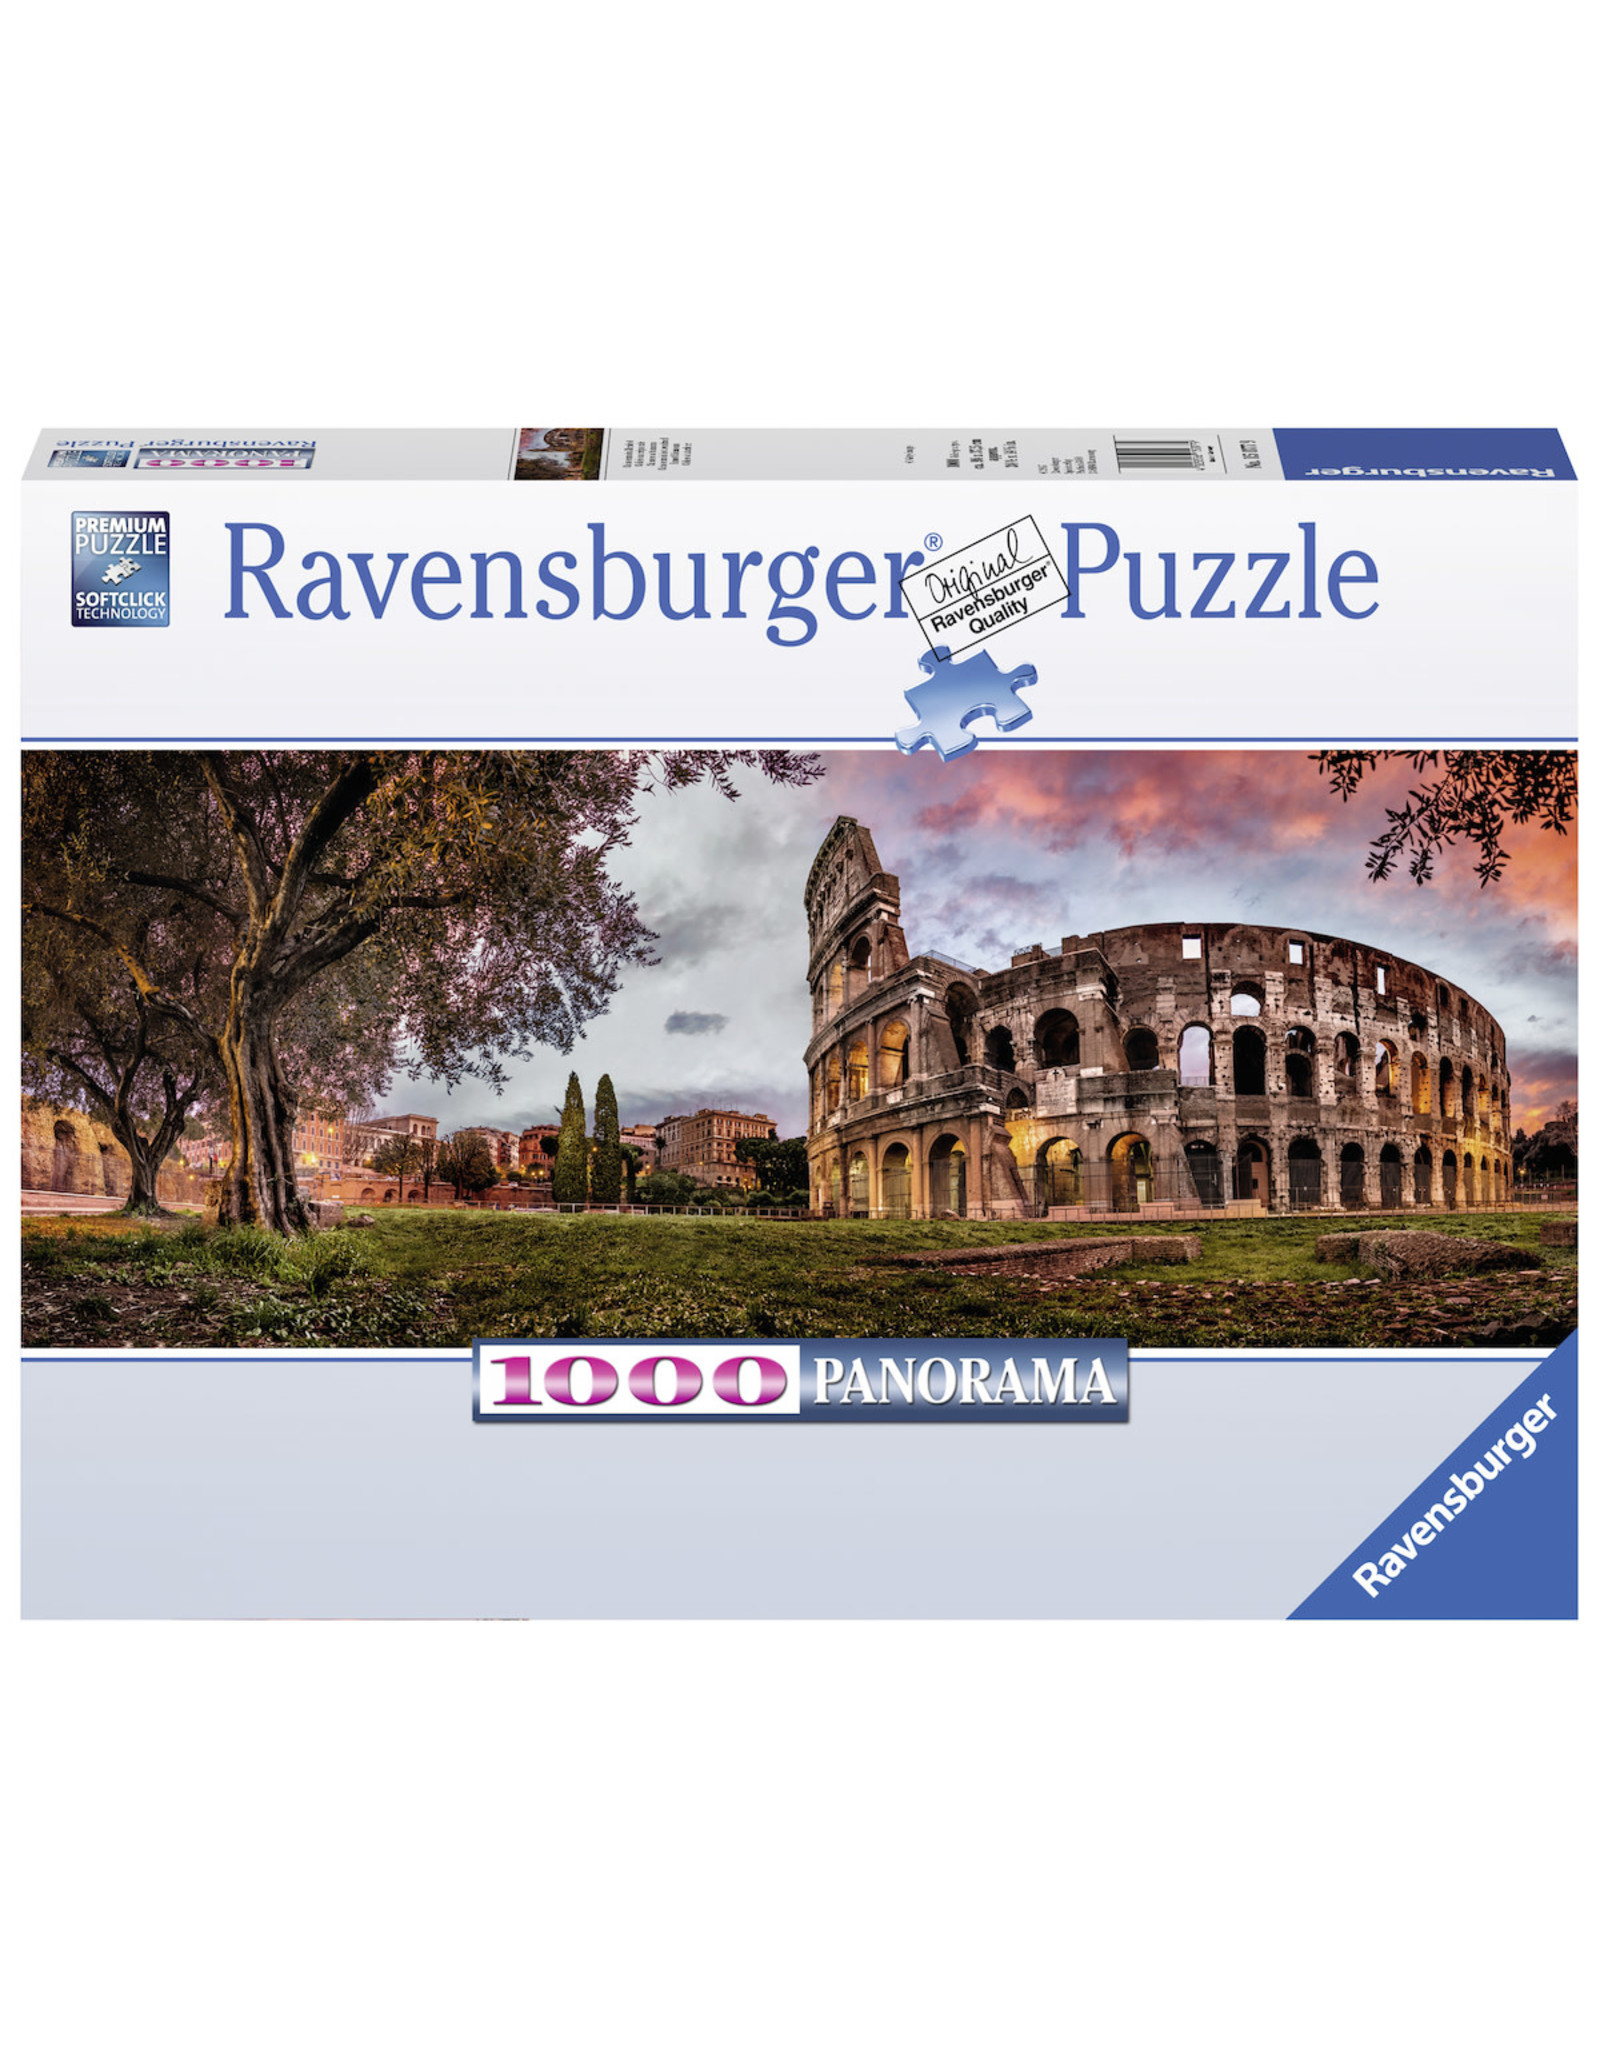 Ravensburger Ravensburger puzzel Panorama 150779 Collosseum bij Zonsopgang  - 1000 stukjes